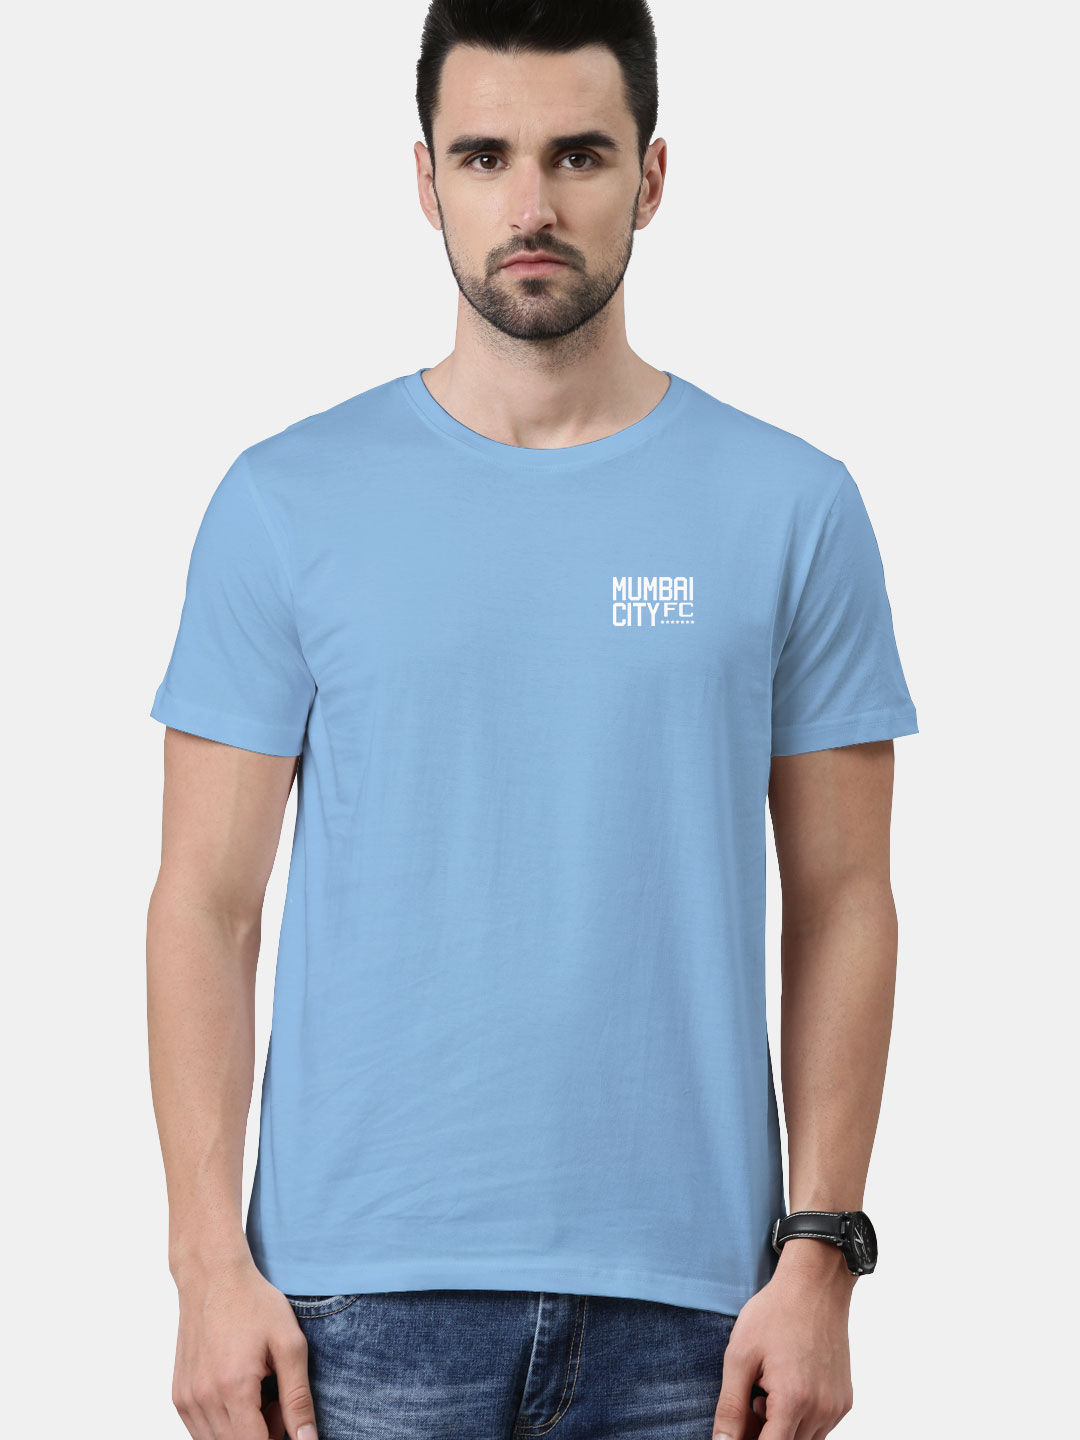 Buy MCFC Aamchi City - Male Designer T-Shirts Light Blue T-Shirts Online